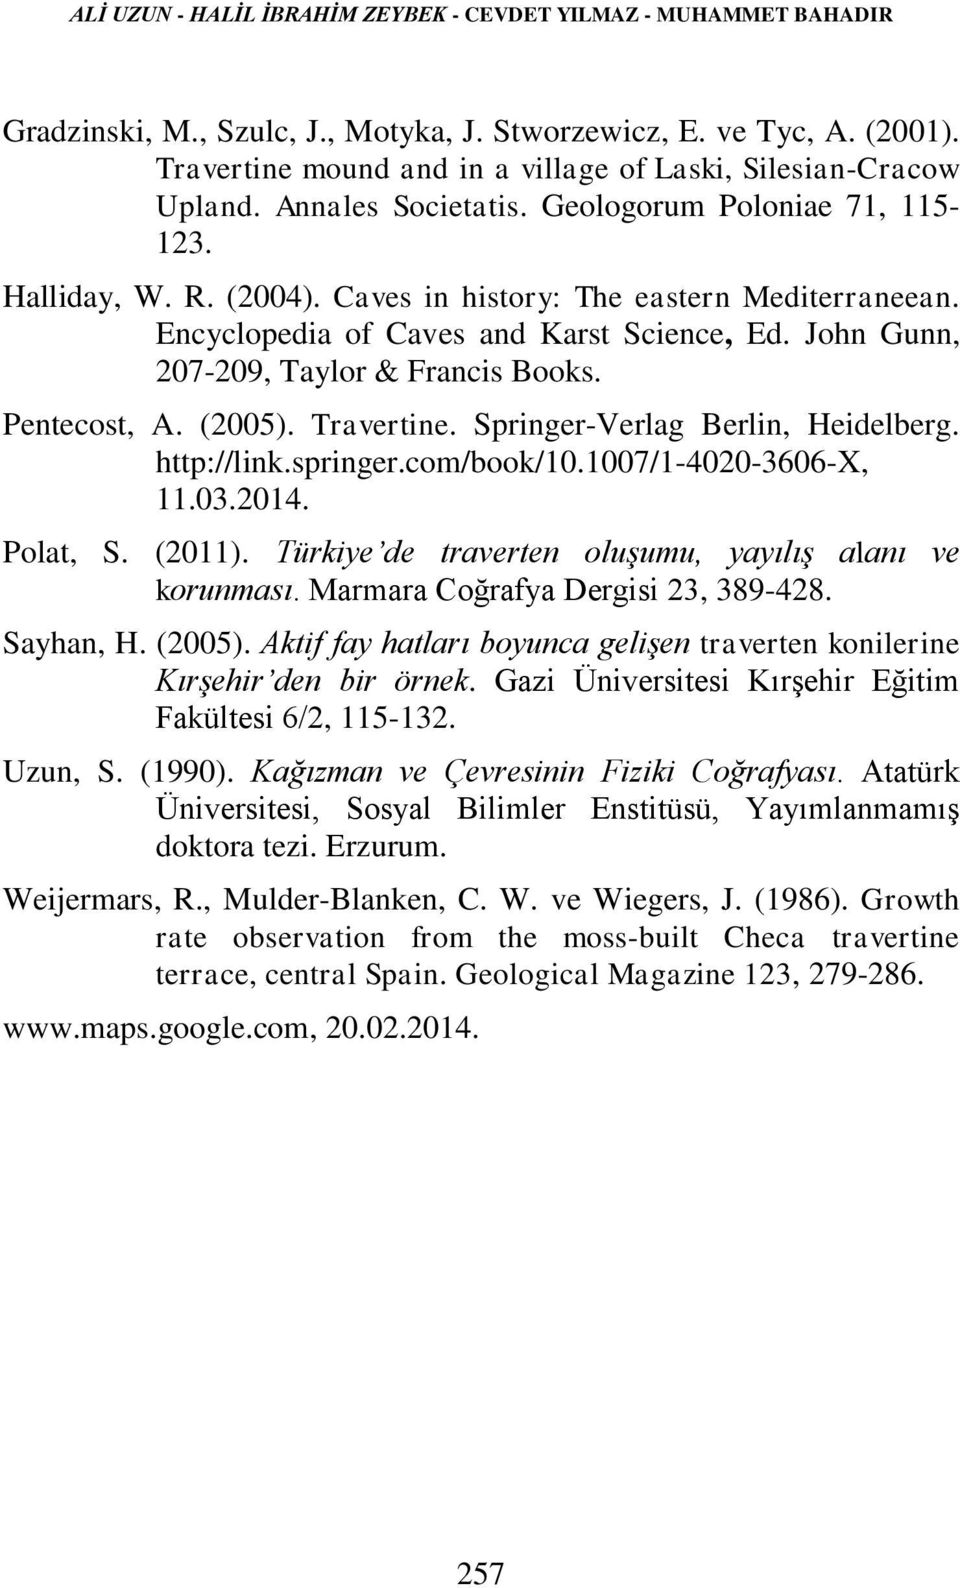 Encyclopedia of Caves and Karst Science, Ed. John Gunn, 207-209, Taylor & Francis Books. Pentecost, A. (2005). Travertine. Springer-Verlag Berlin, Heidelberg. http://link.springer.com/book/10.